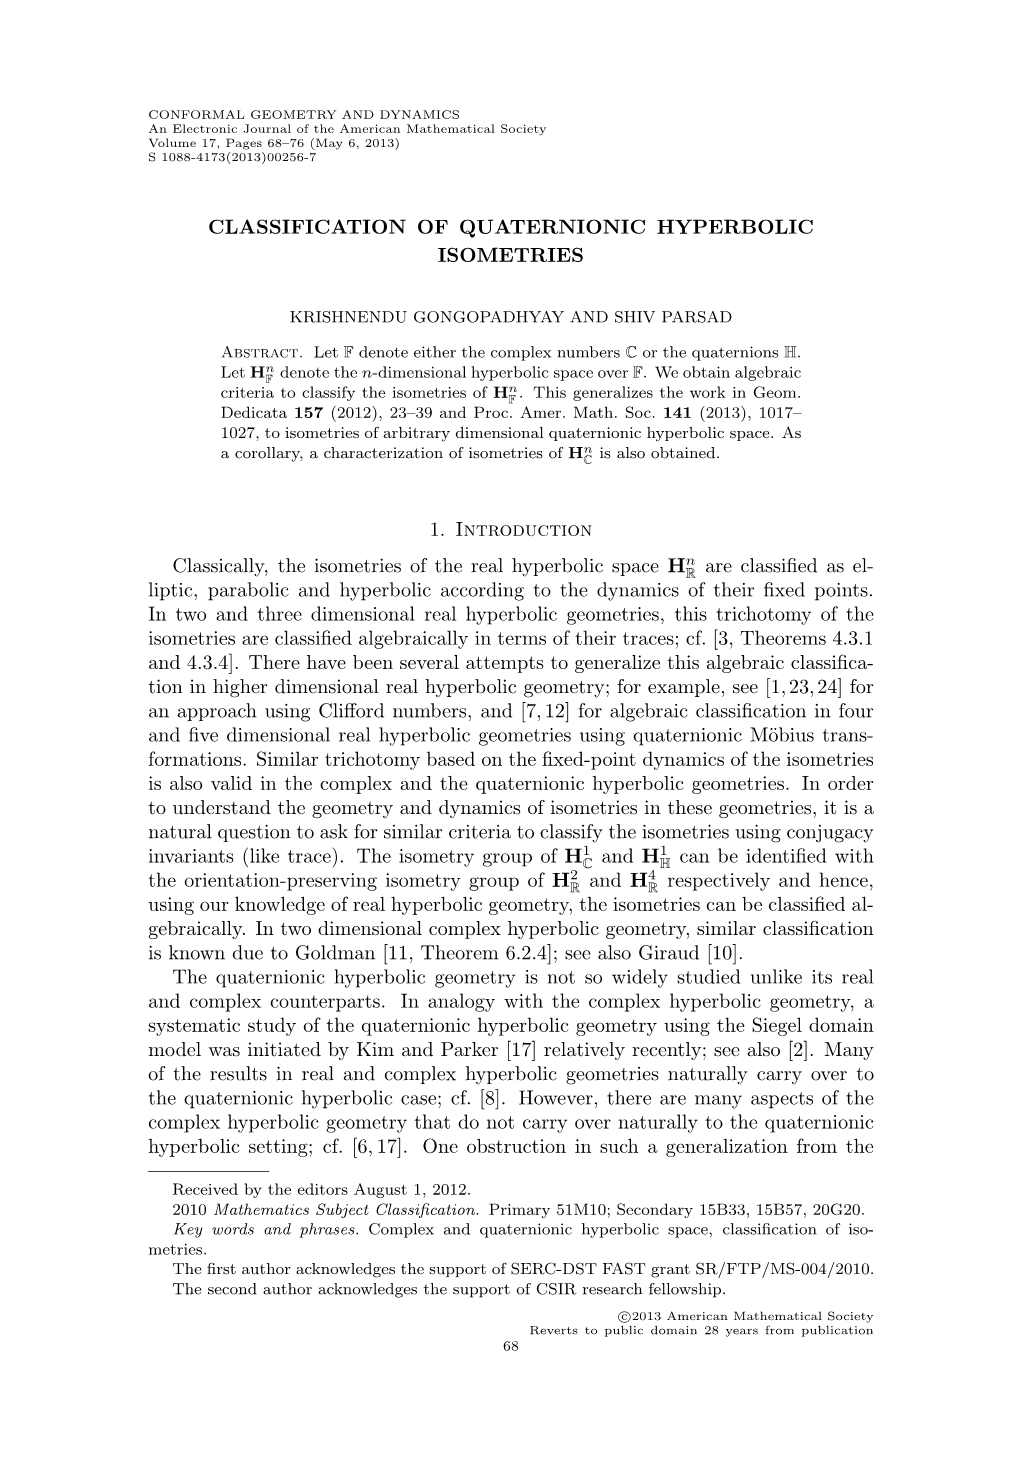 Classification of Quaternionic Hyperbolic Isometries